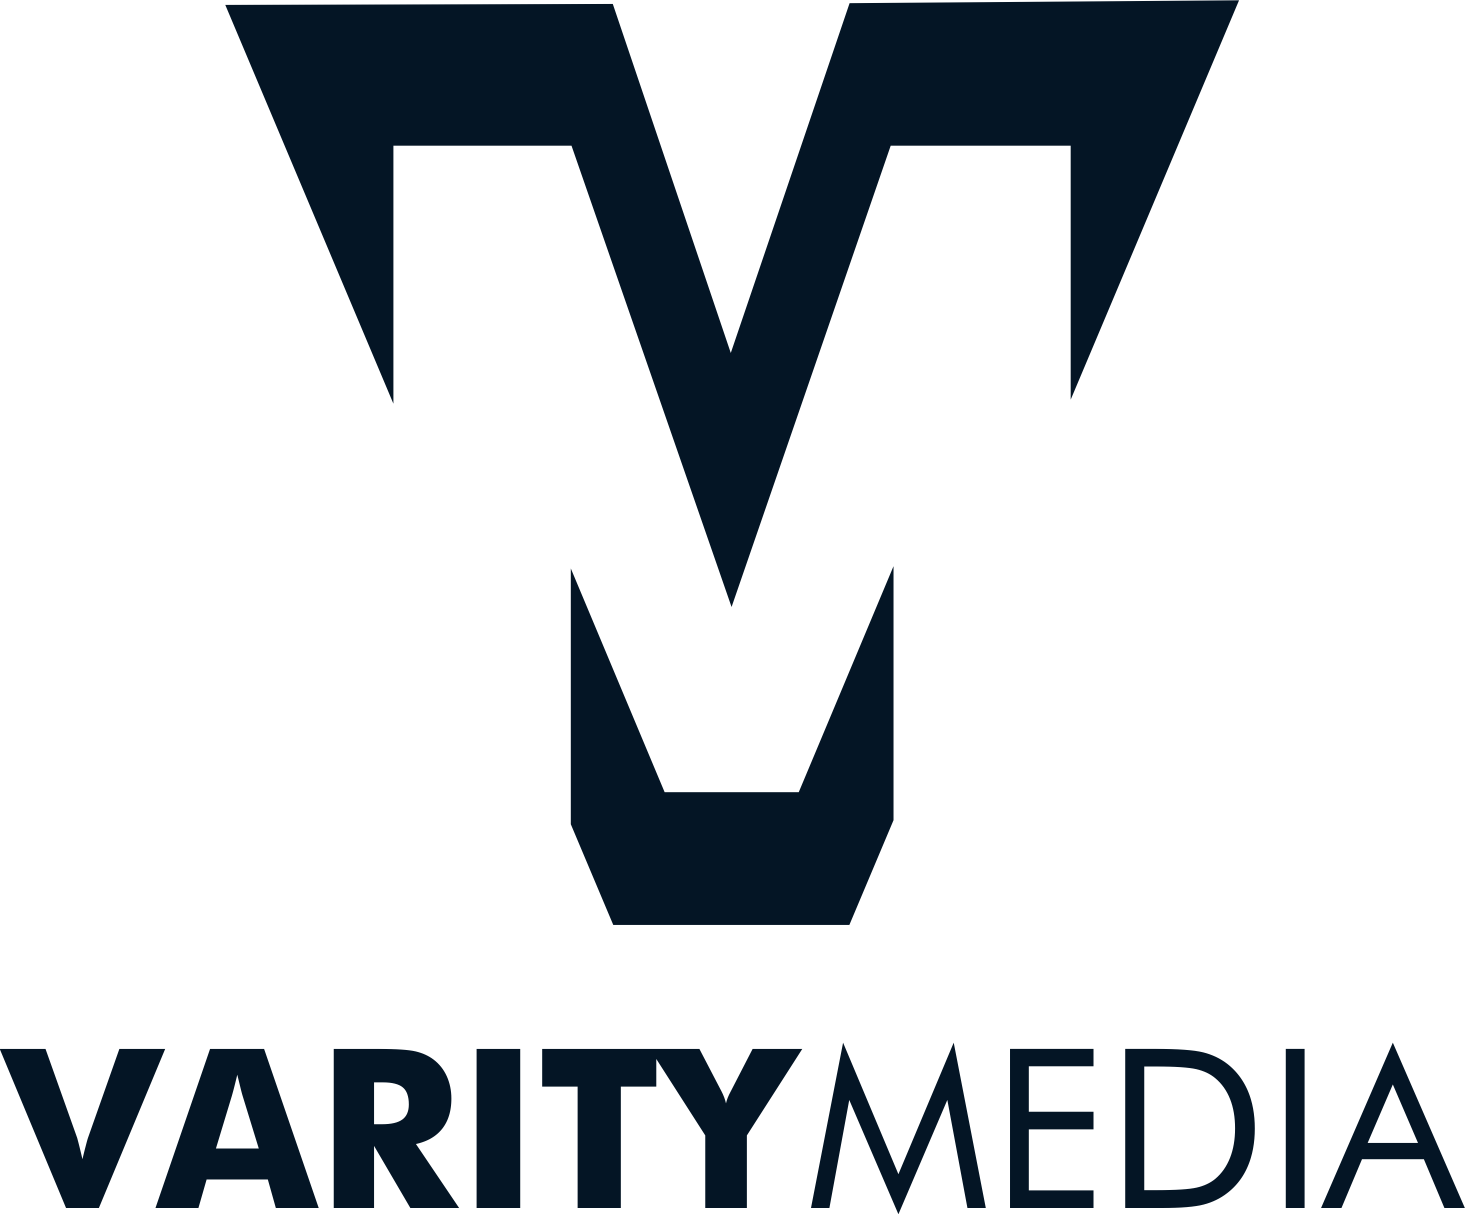 VarityMedia profile on Qualified.One